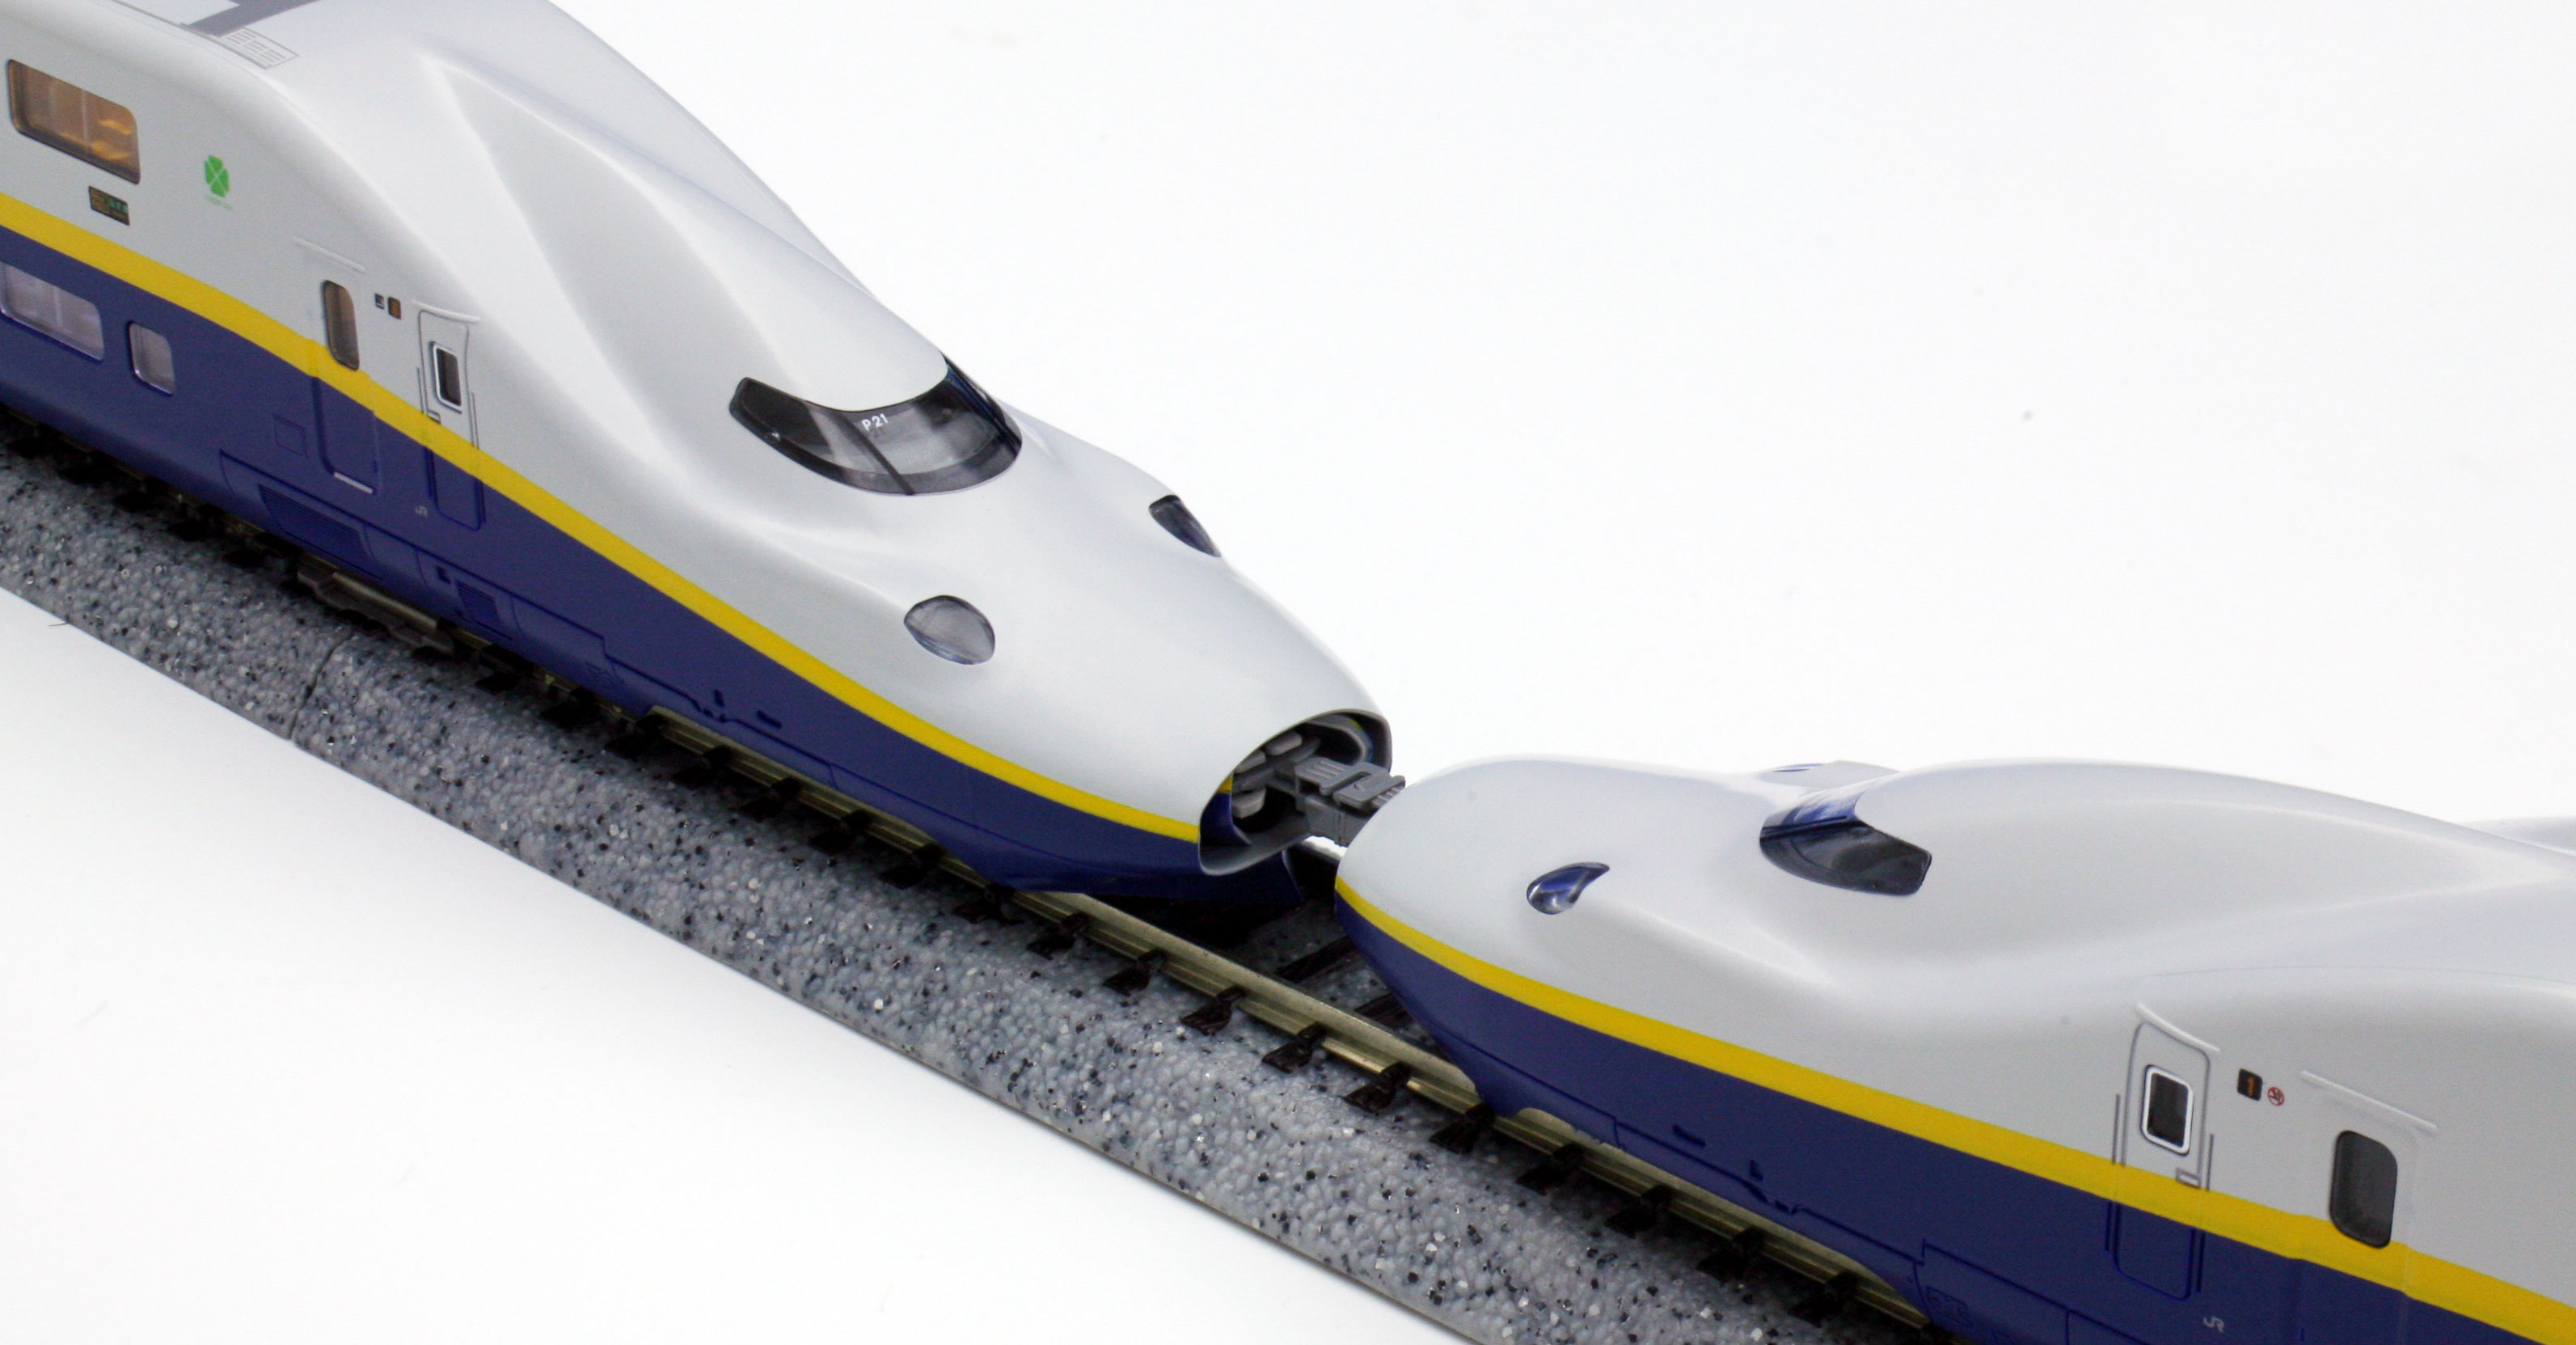 KATO Nゲージ E4系新幹線 Max 8両セット 10-1730 鉄道模型 電車 白